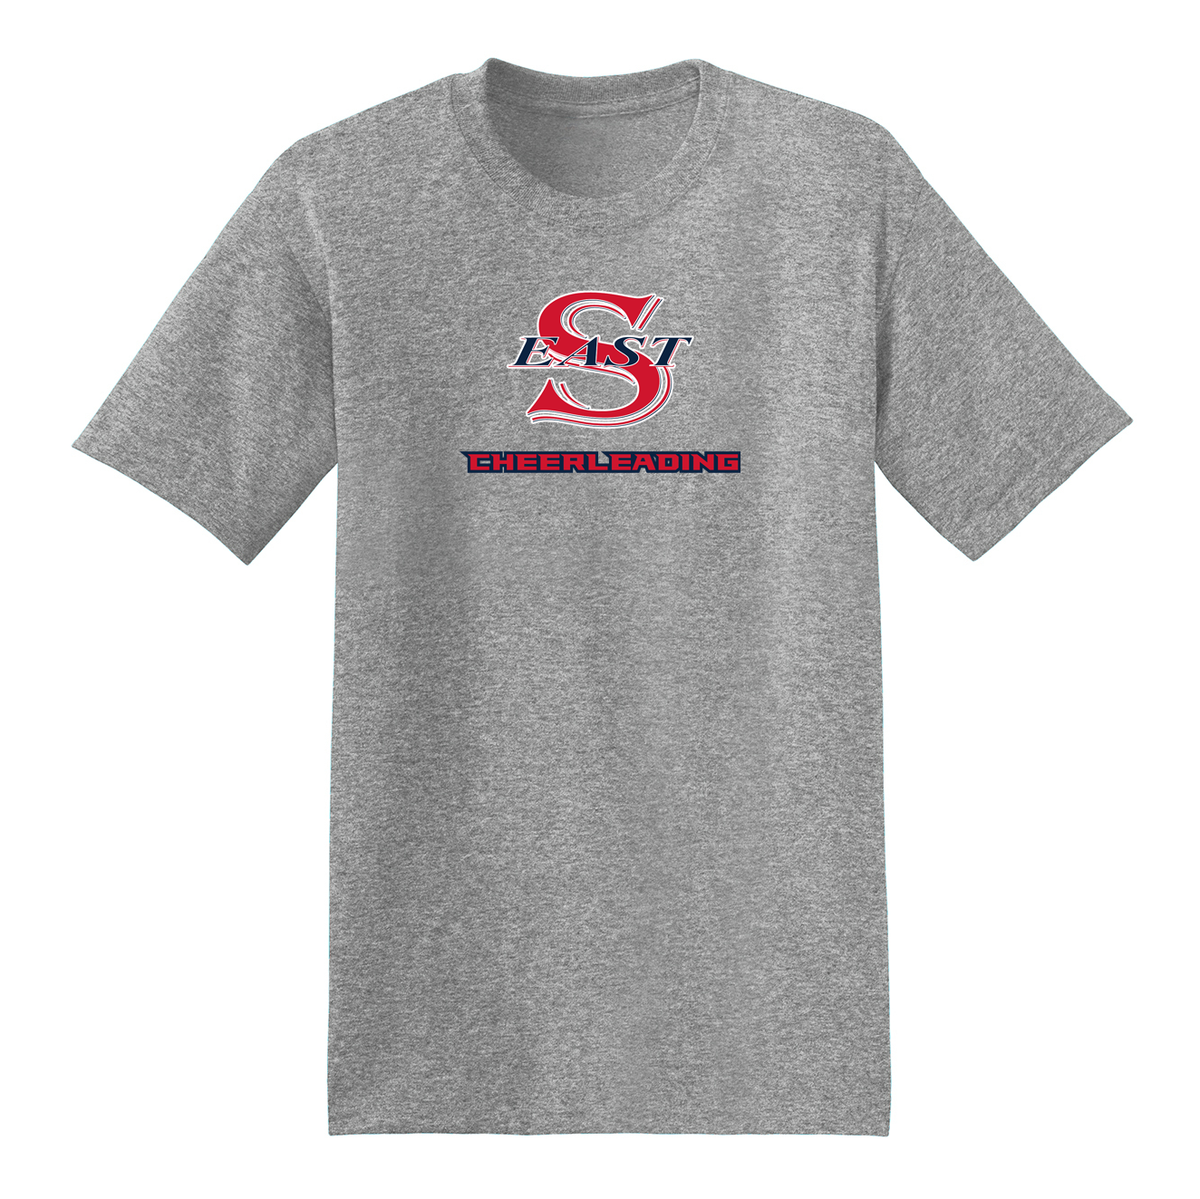 Smithtown East Cheerleading T-Shirt